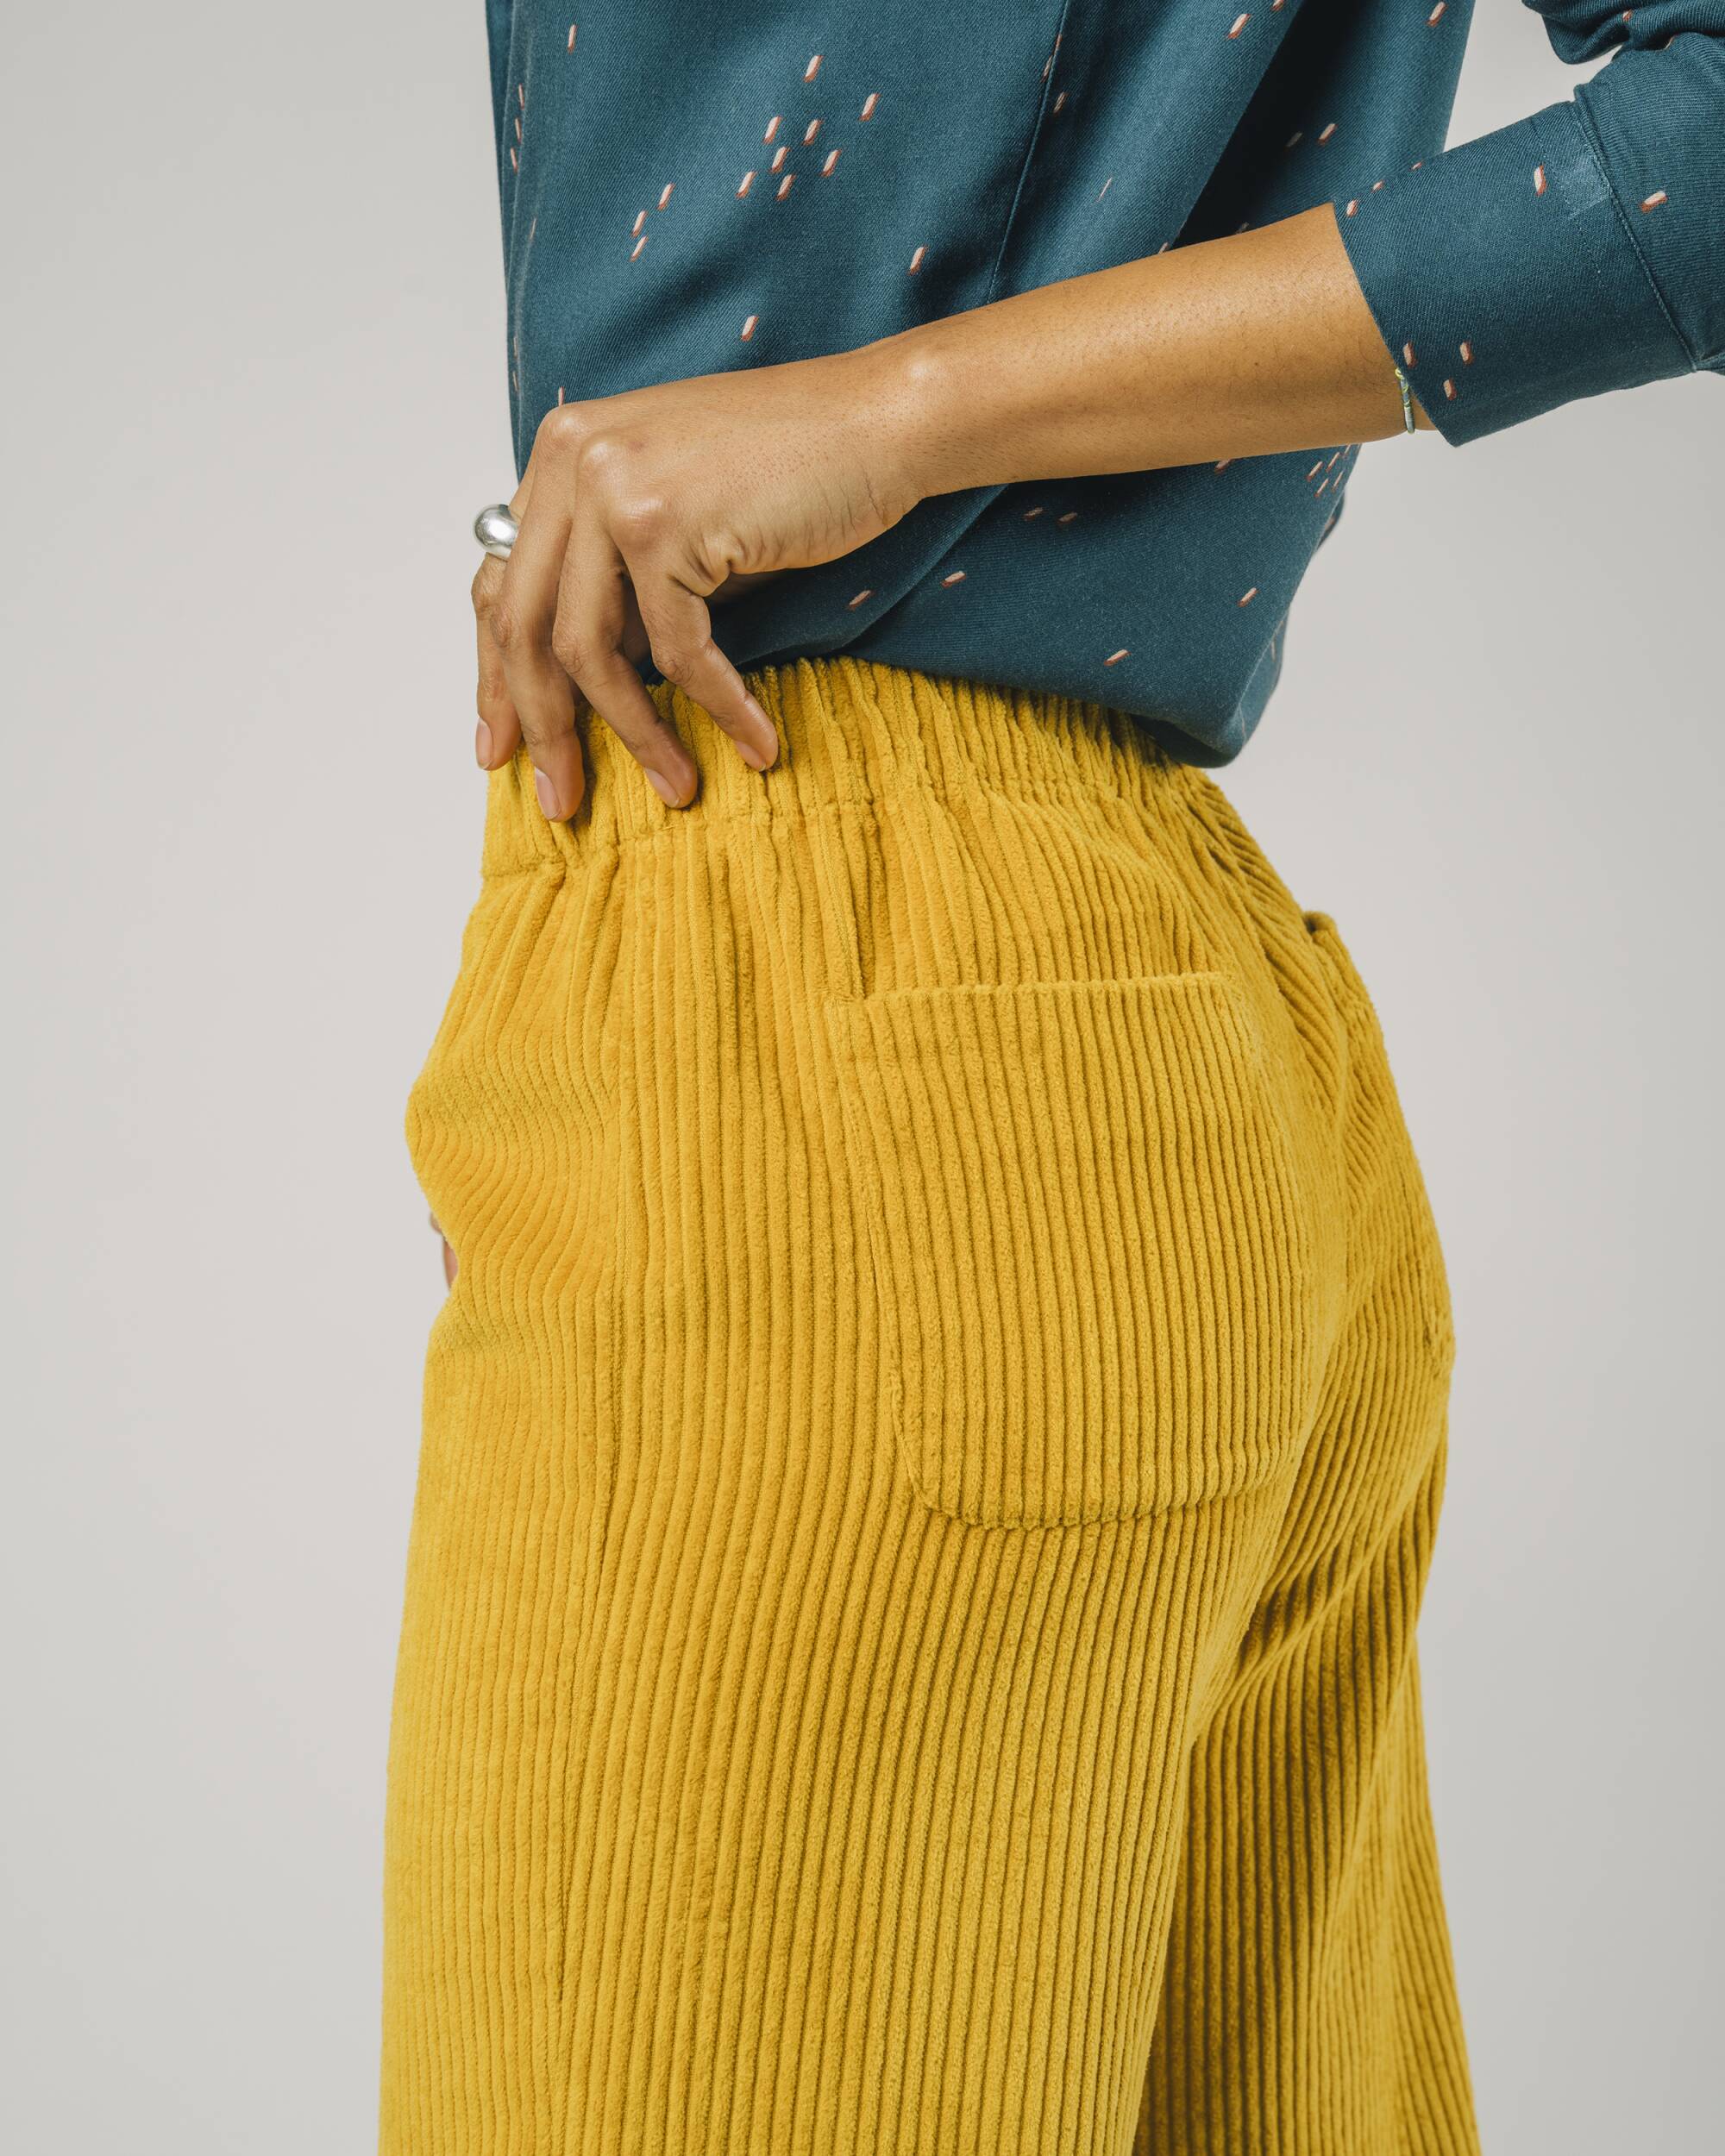 Brava Fabrics Bukser Wide Leg Corduroy Pant Guld bæredygtig mode etisk mode